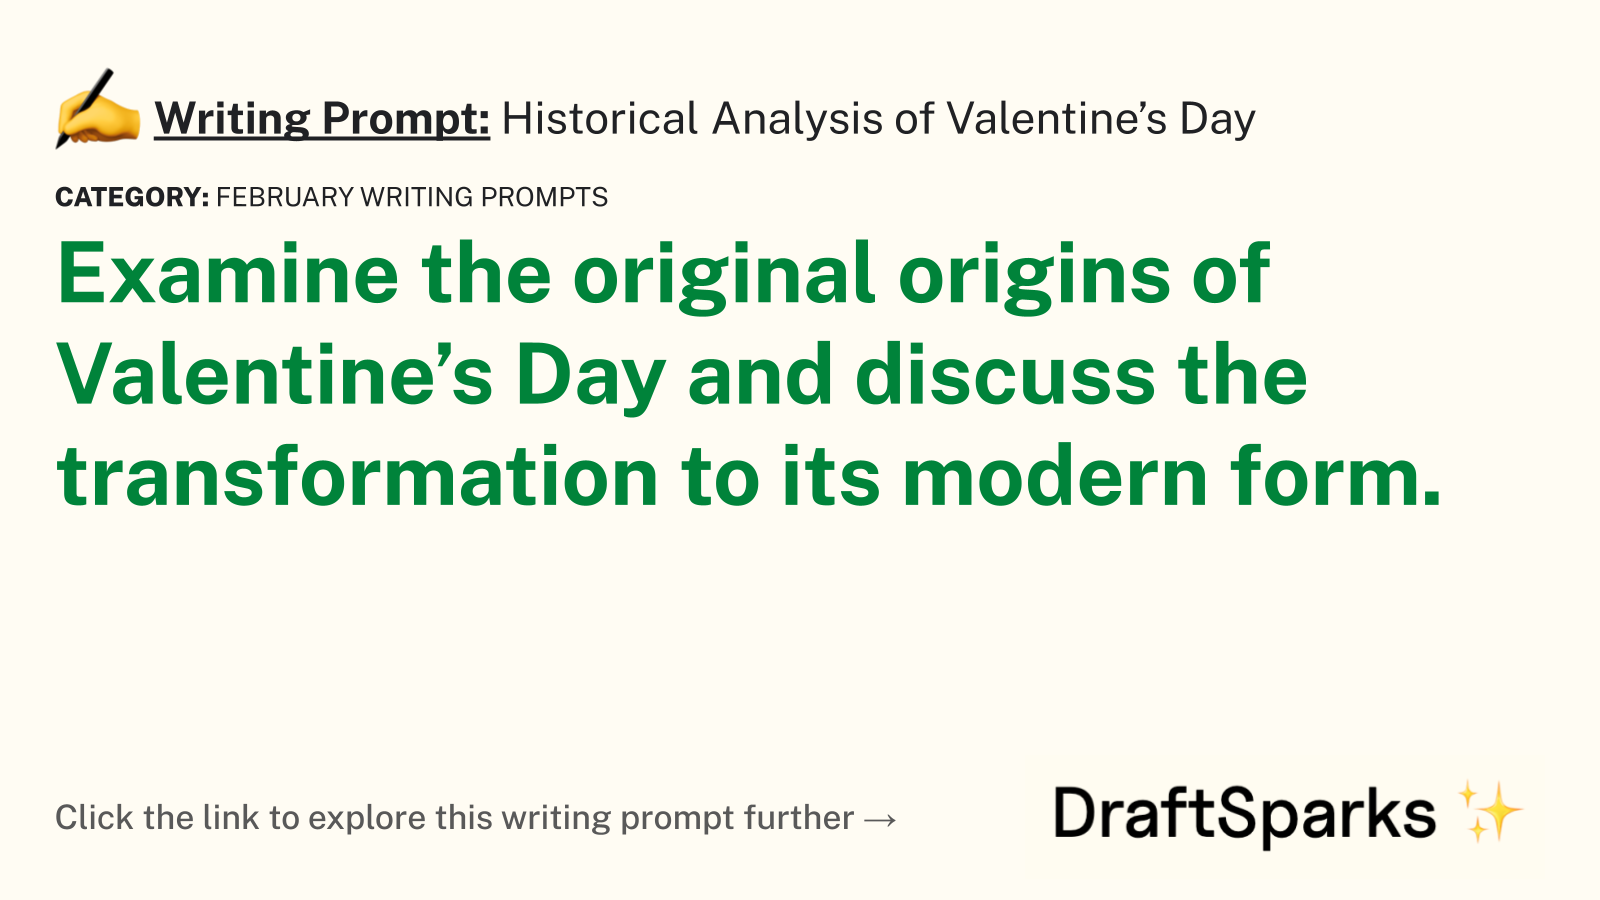 Historical Analysis of Valentine’s Day